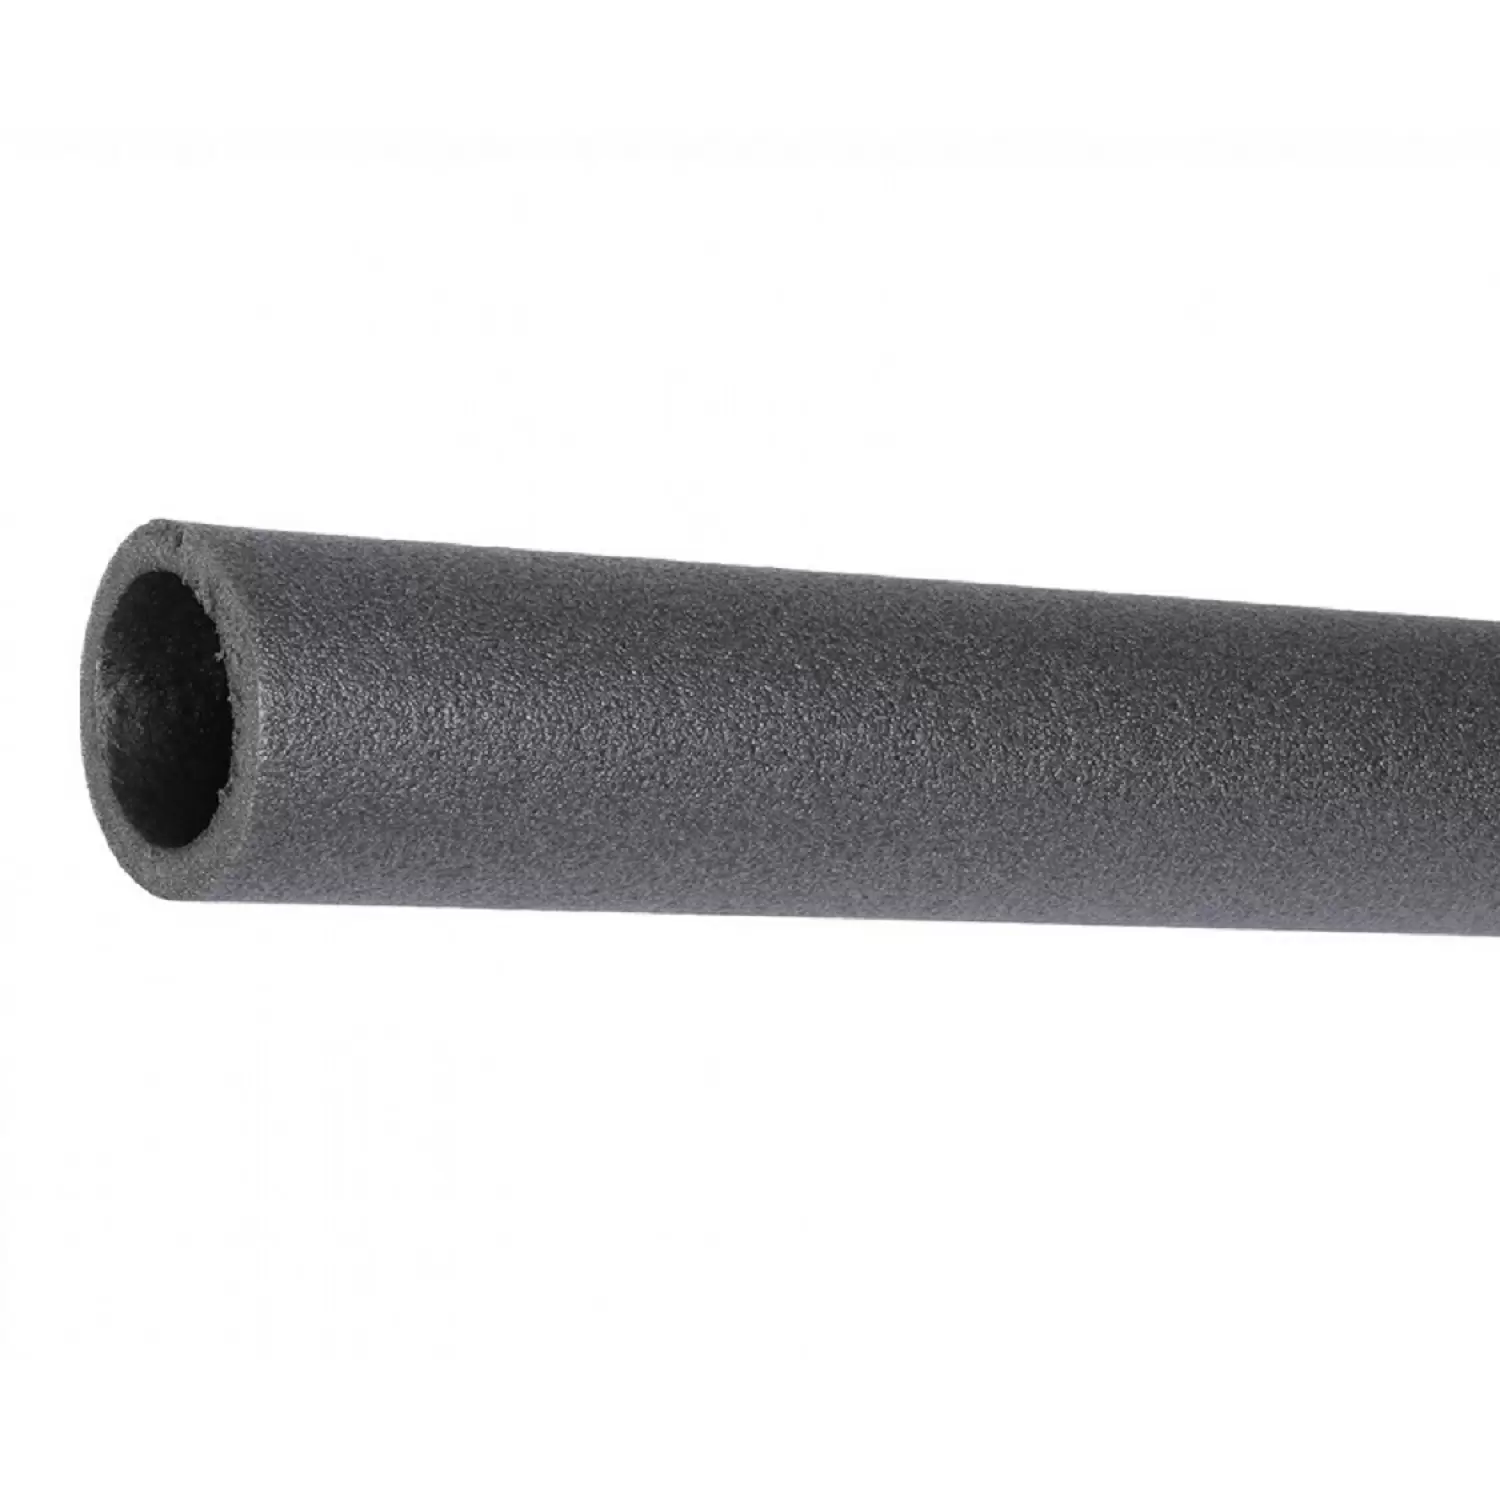 Теплоизоляция Энергофлекс супер 22/9 для труб диаметром 20 мм, трубка 2 м